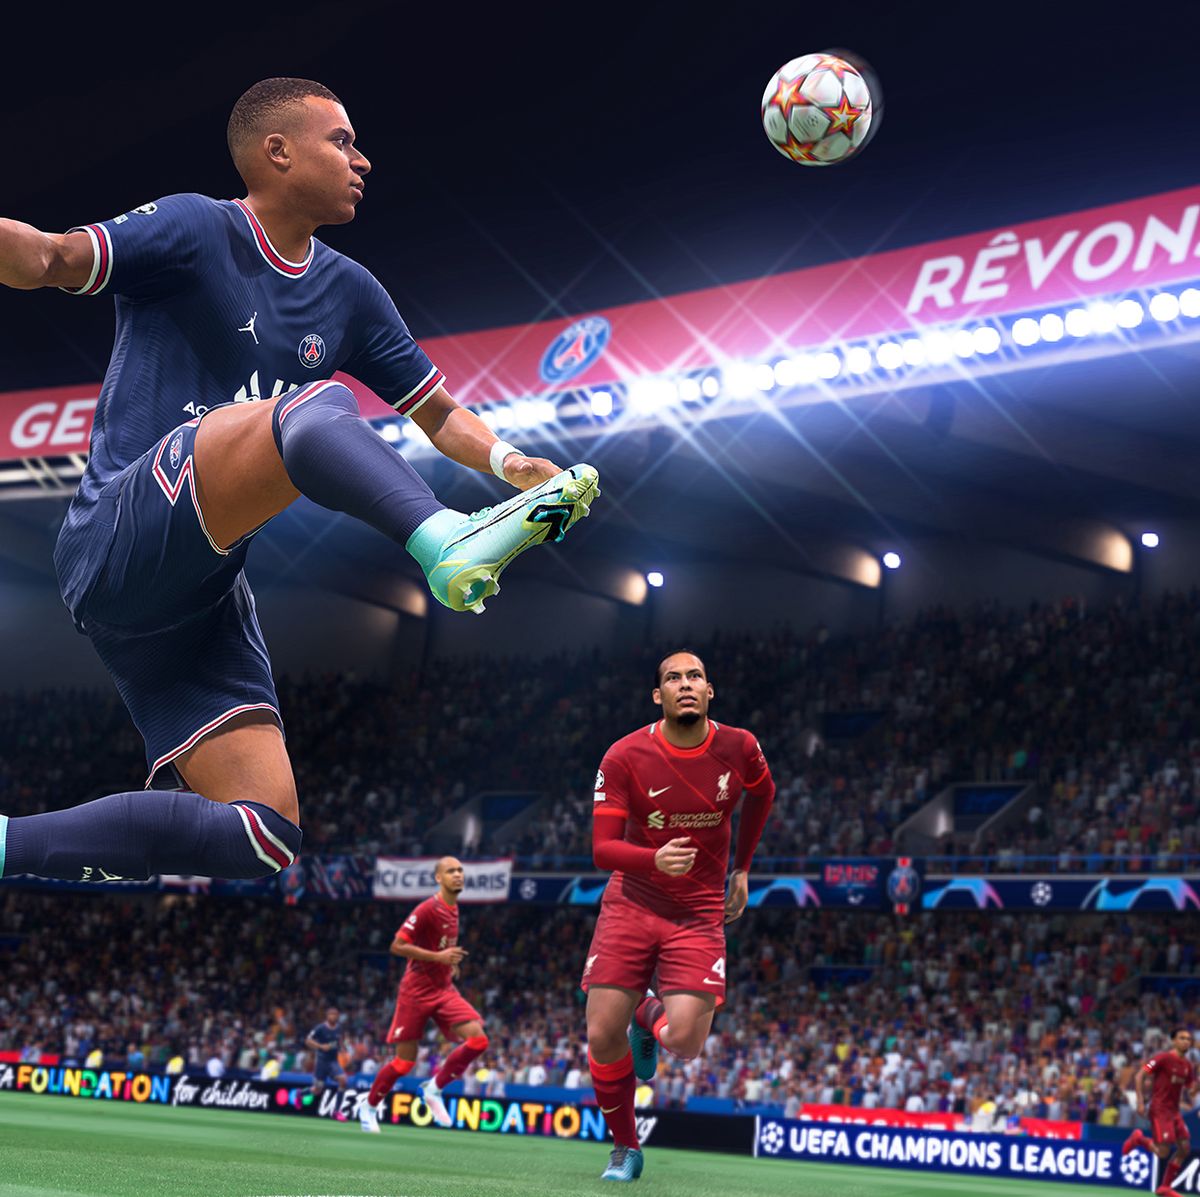 Jogo PC FIFA 23 – MediaMarkt